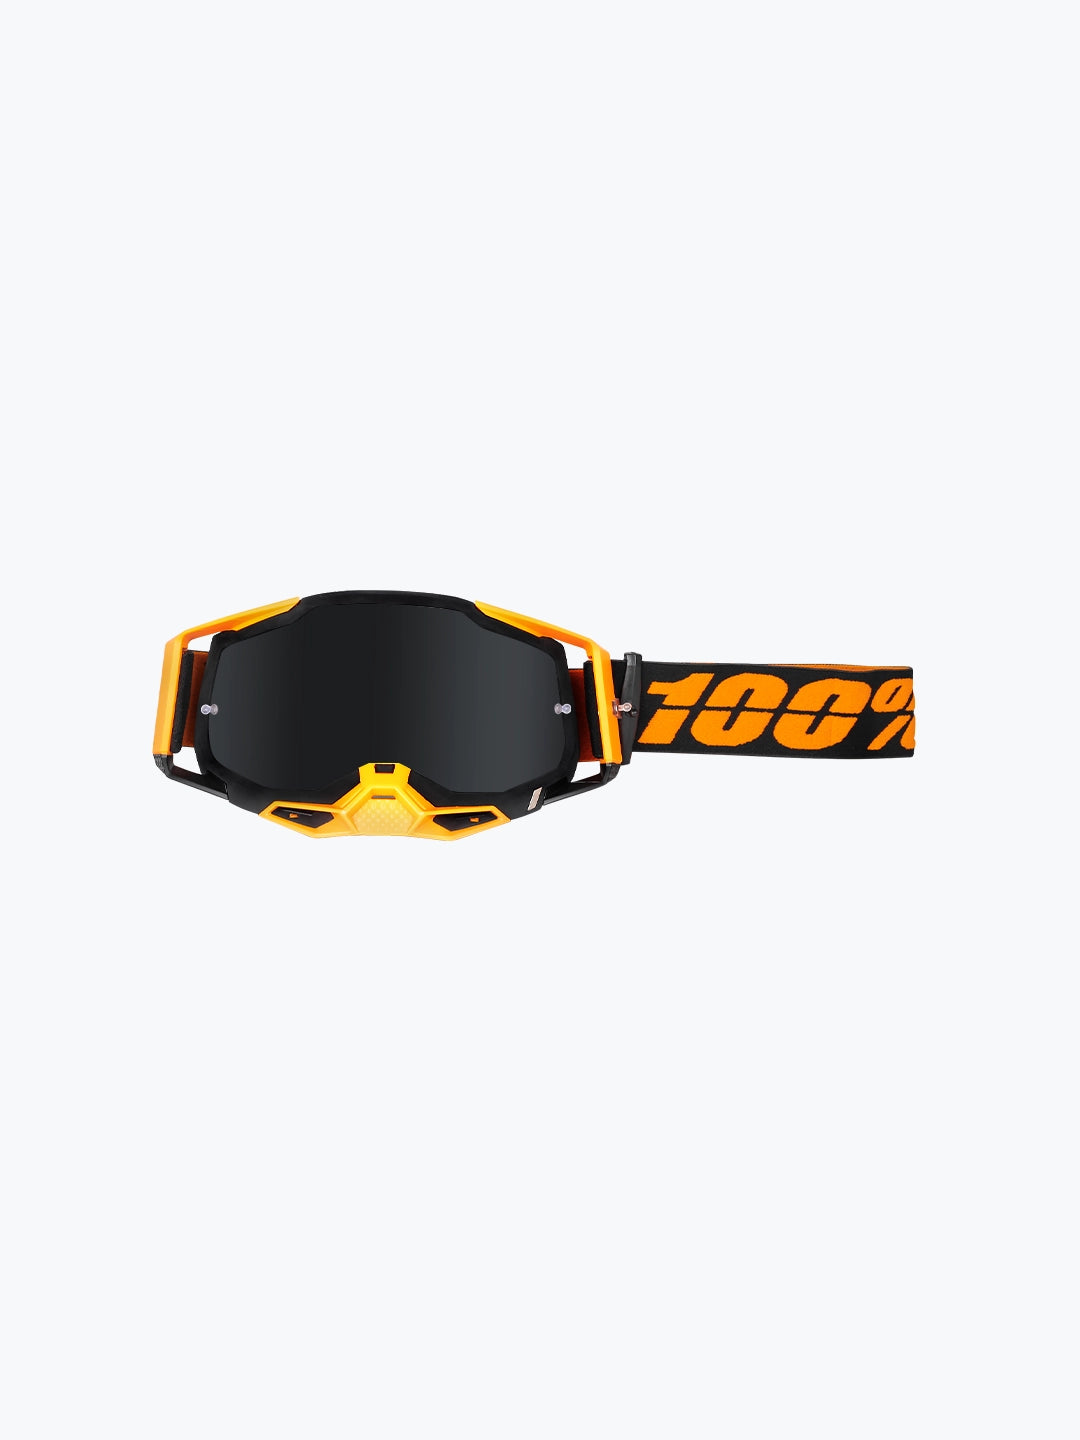 Goggles 100% -212 Black Tint